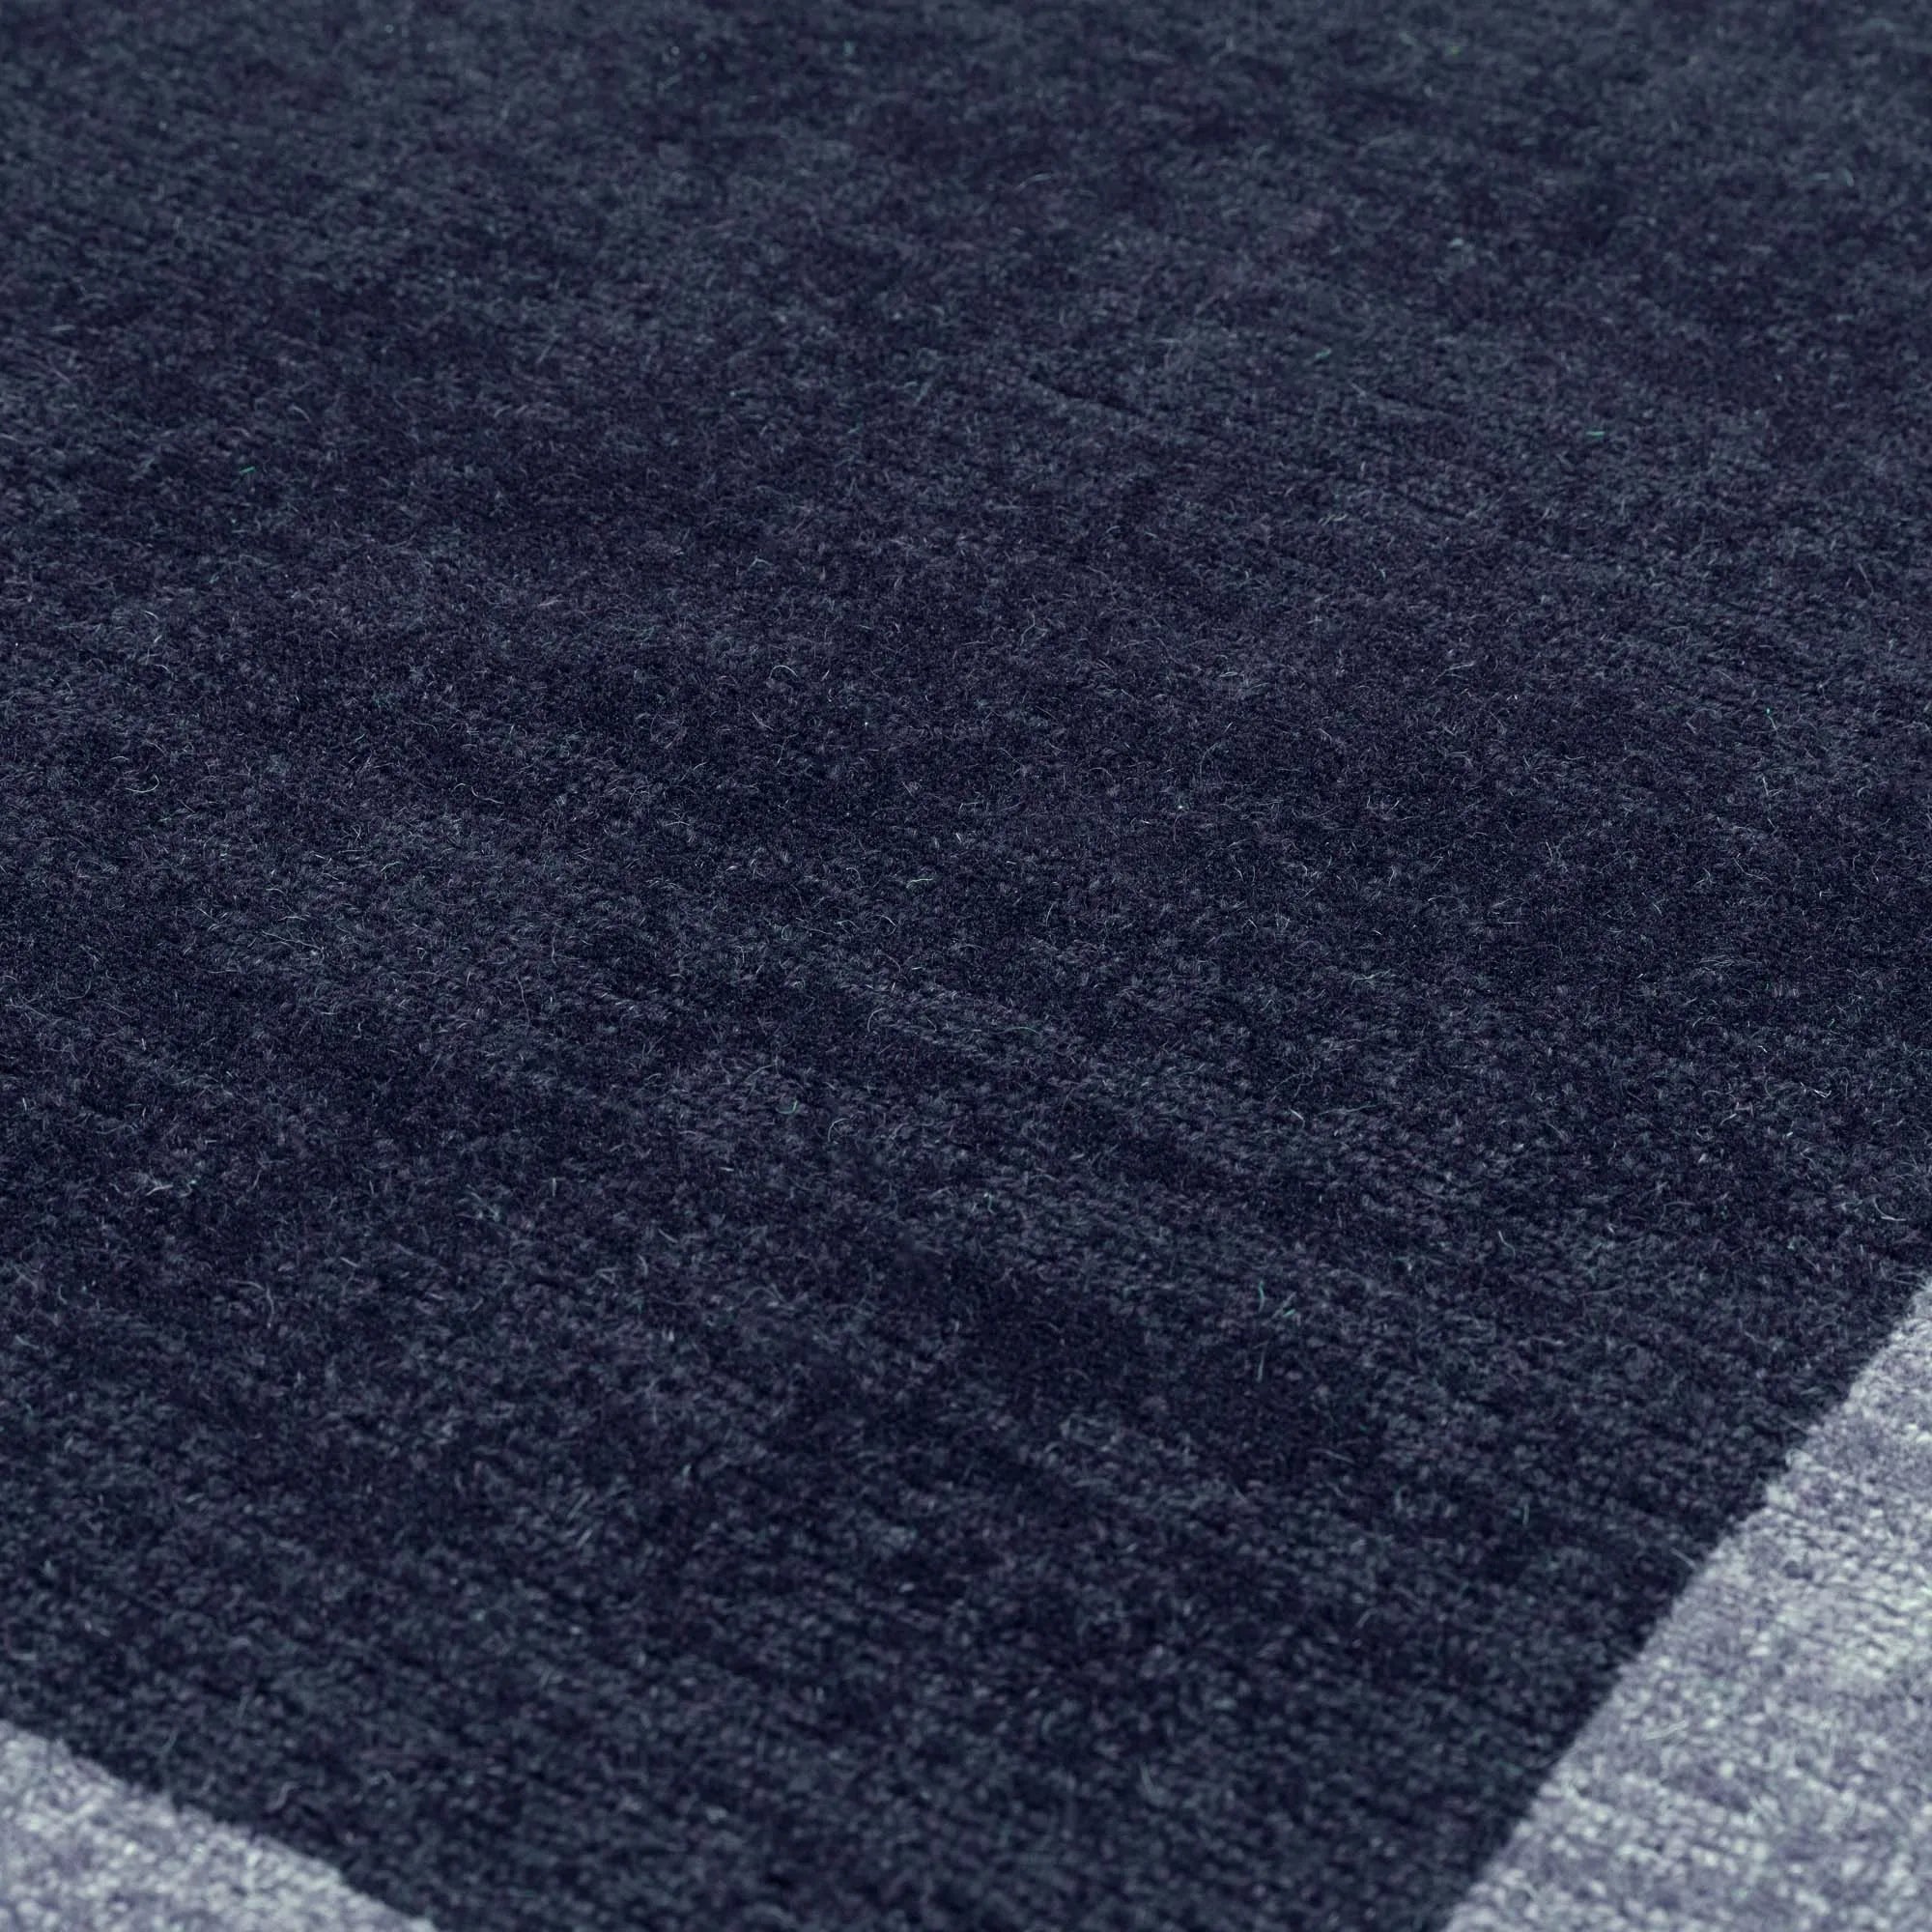 Modern navy border style rug